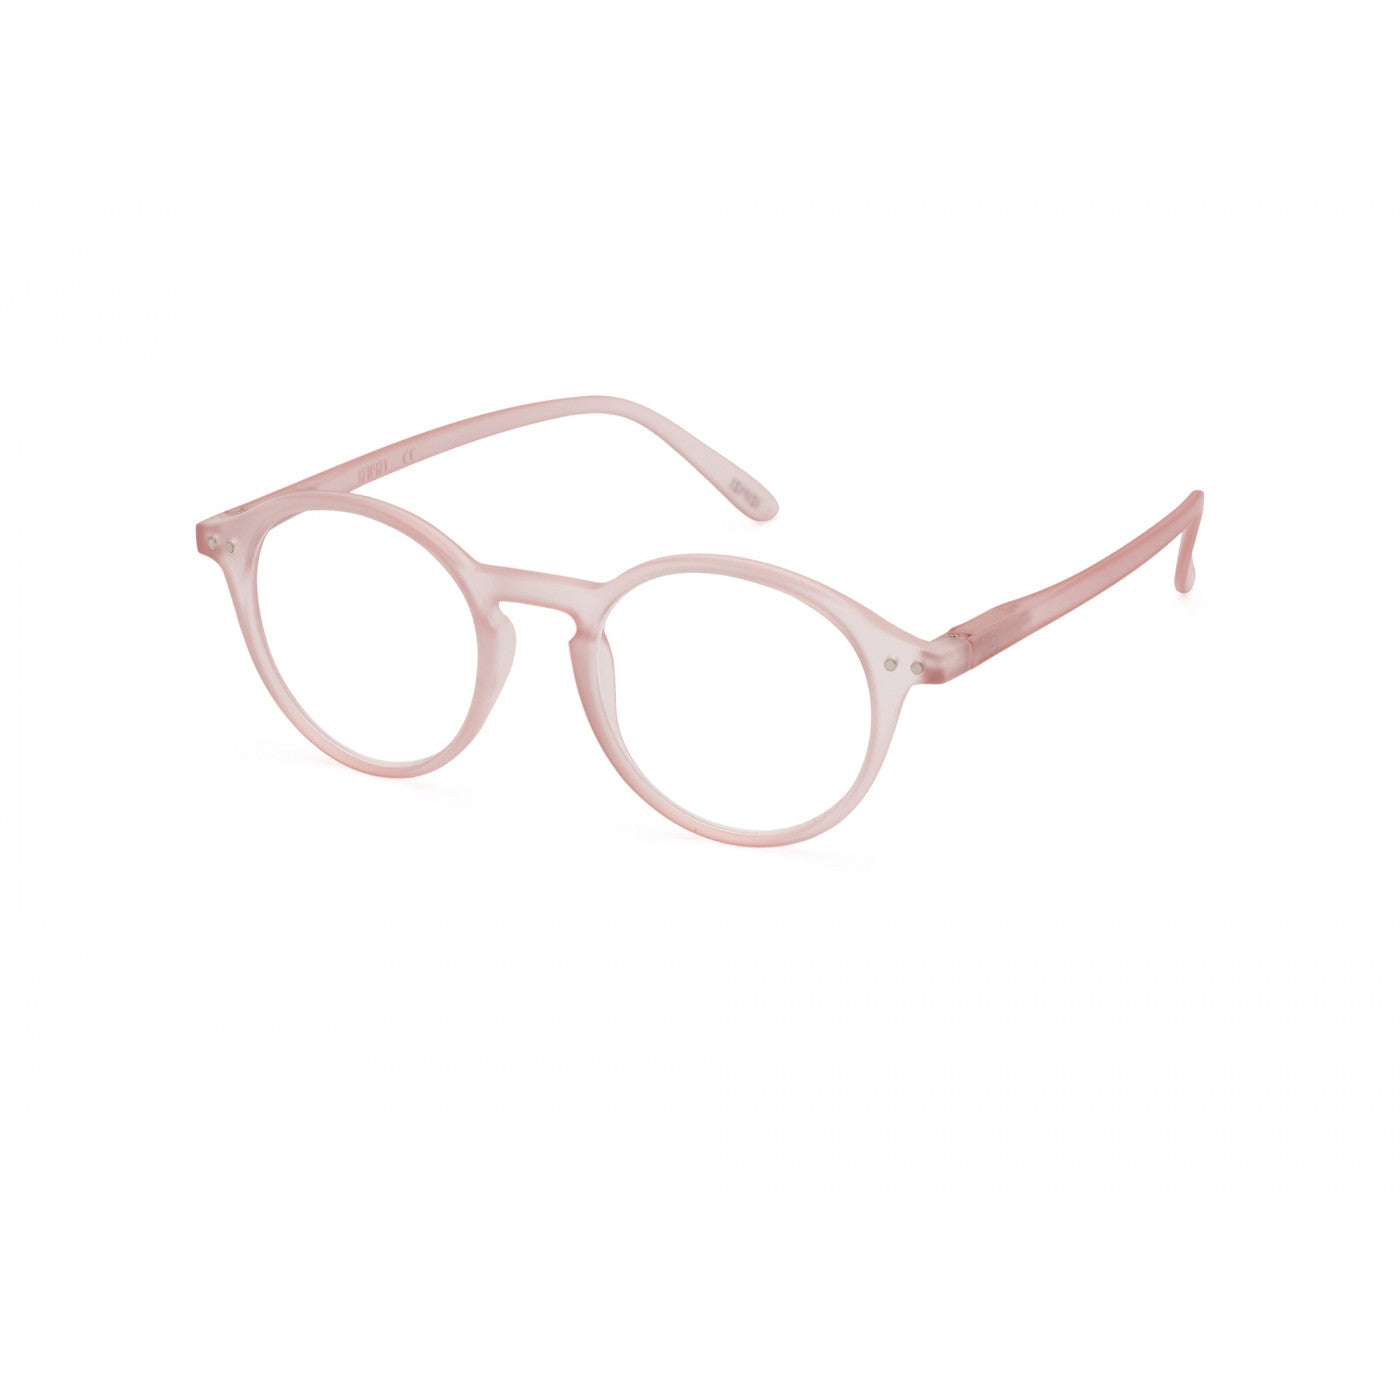 IZIPIZI Shaped #D Pink Reading Glasses